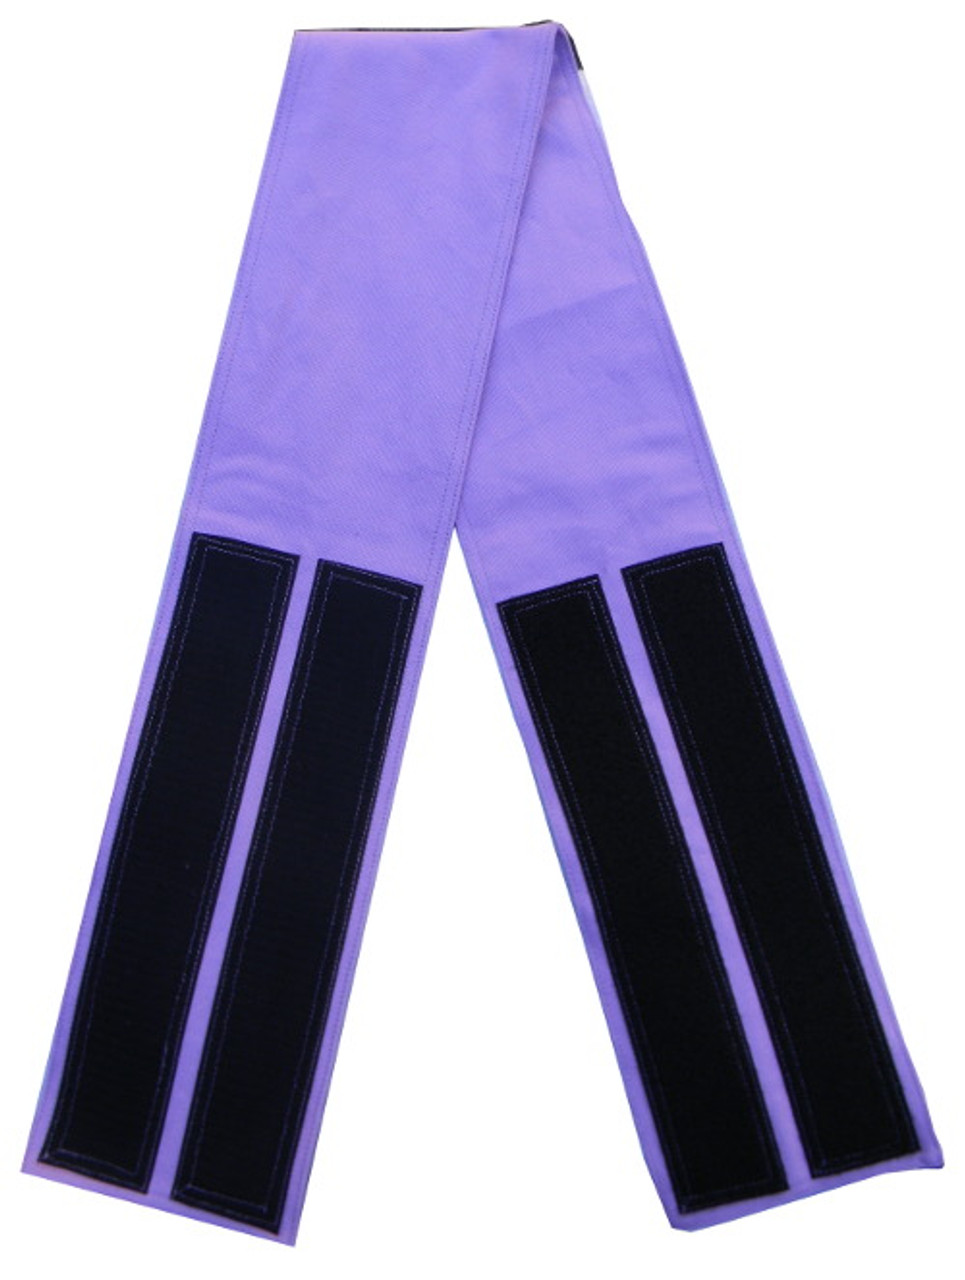 Purple Velcro Fabric Belt